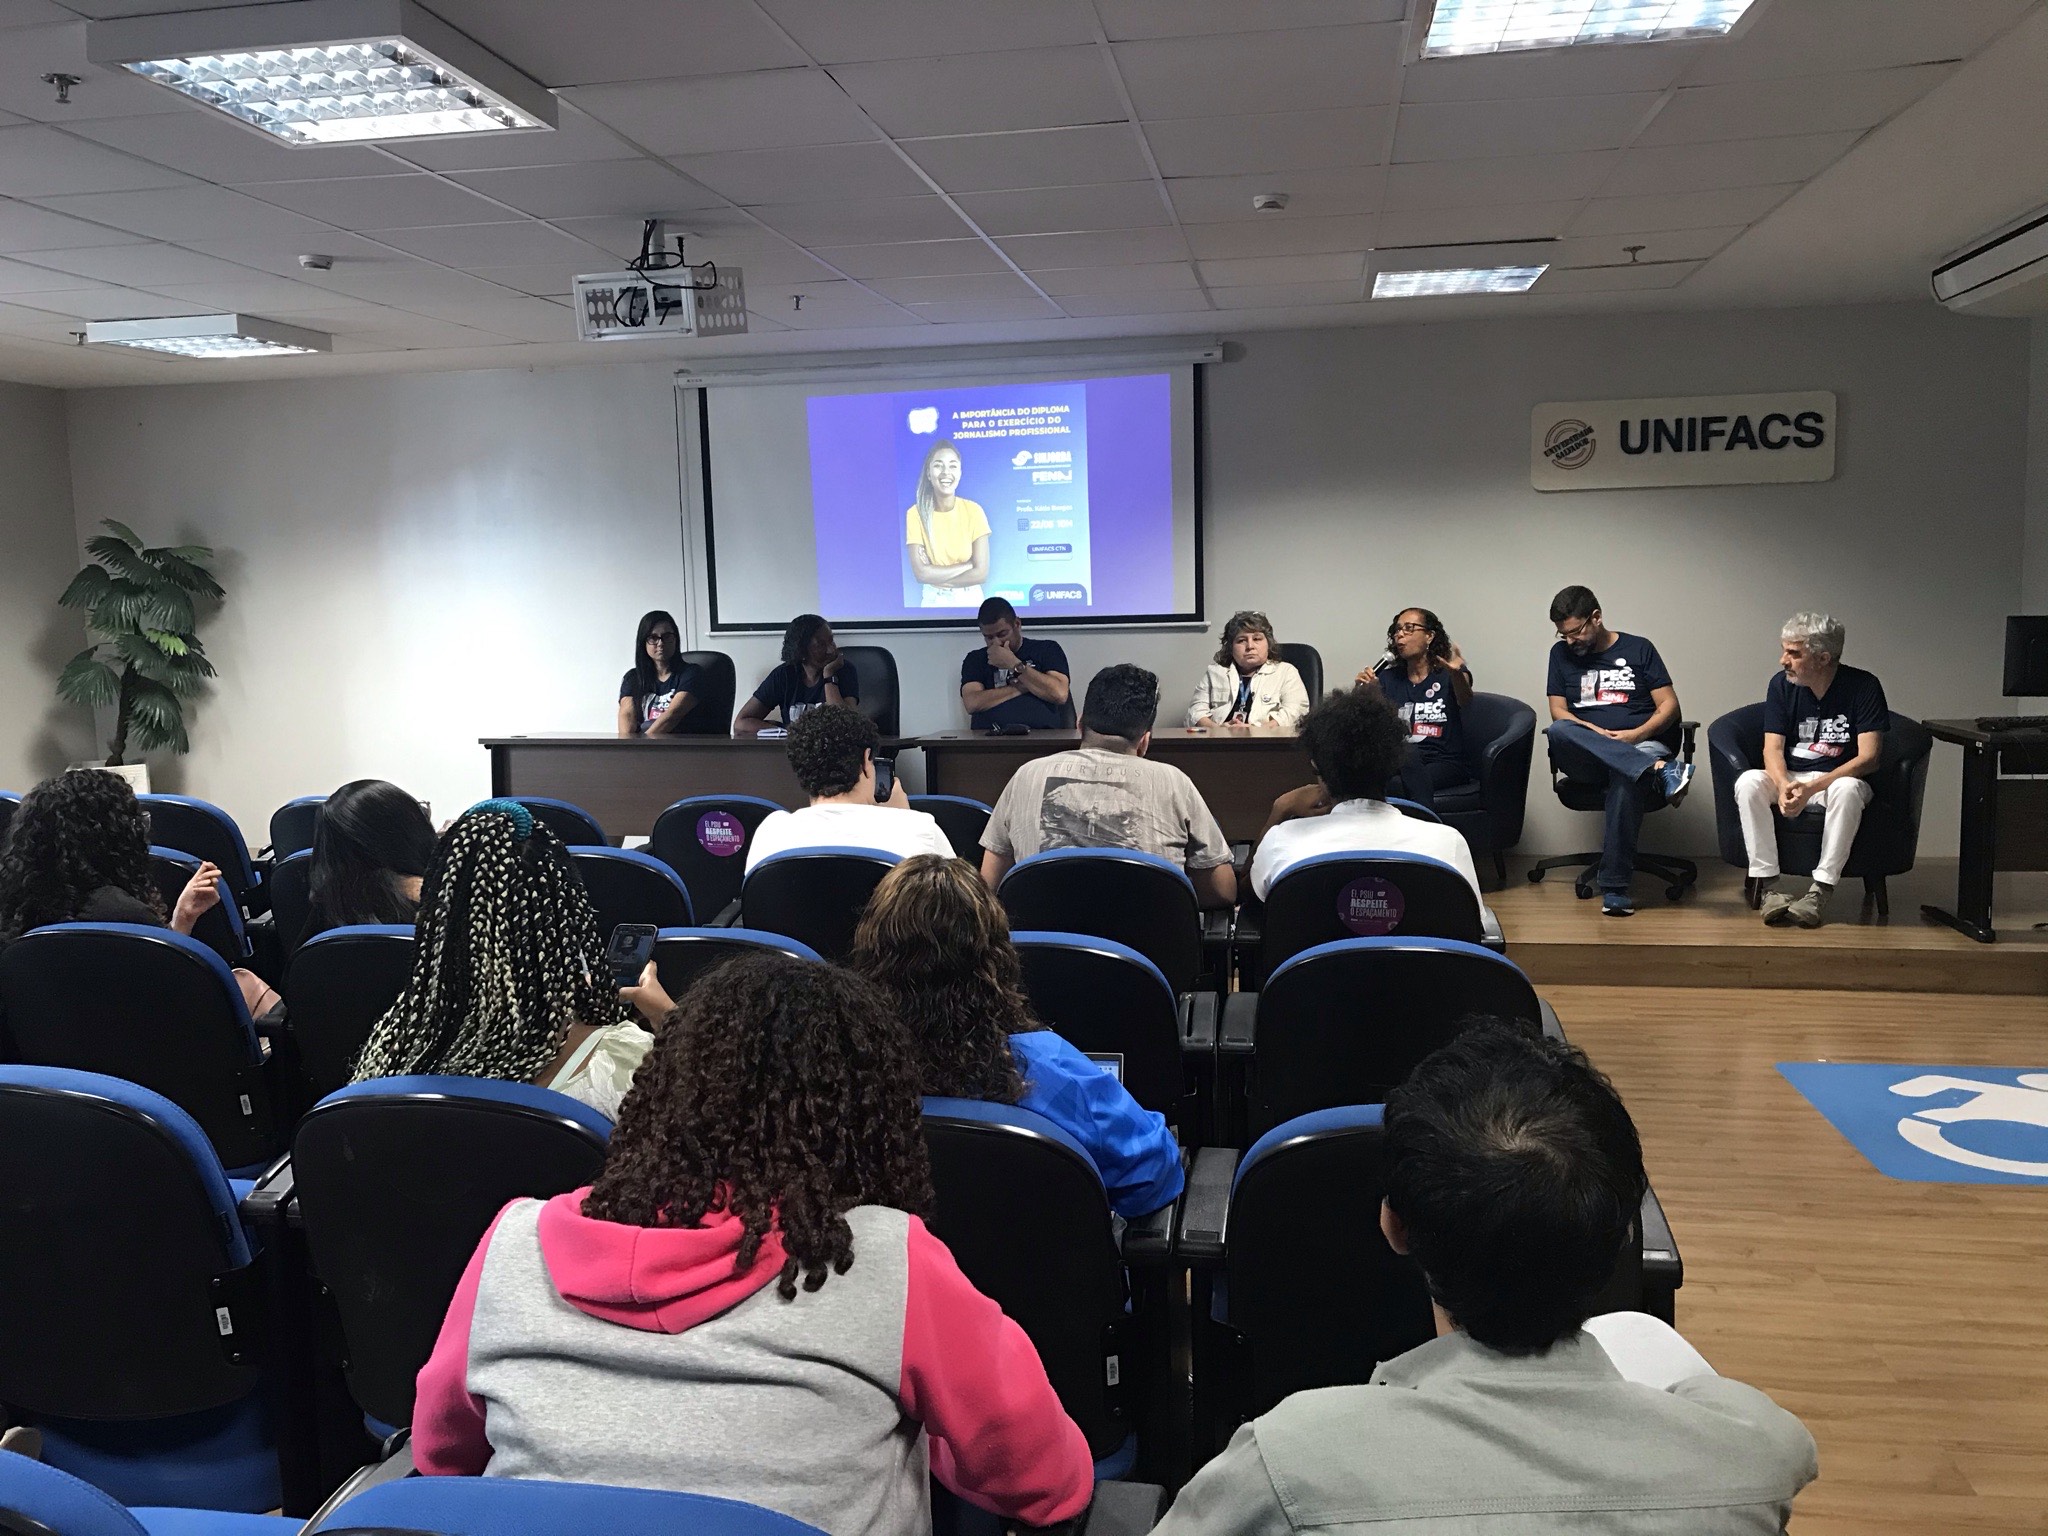 Sindicato dos Jornalistas Profissionais da Bahia e FENAJ promove palestra na UNIFACS sobre importância do diploma jornalístico